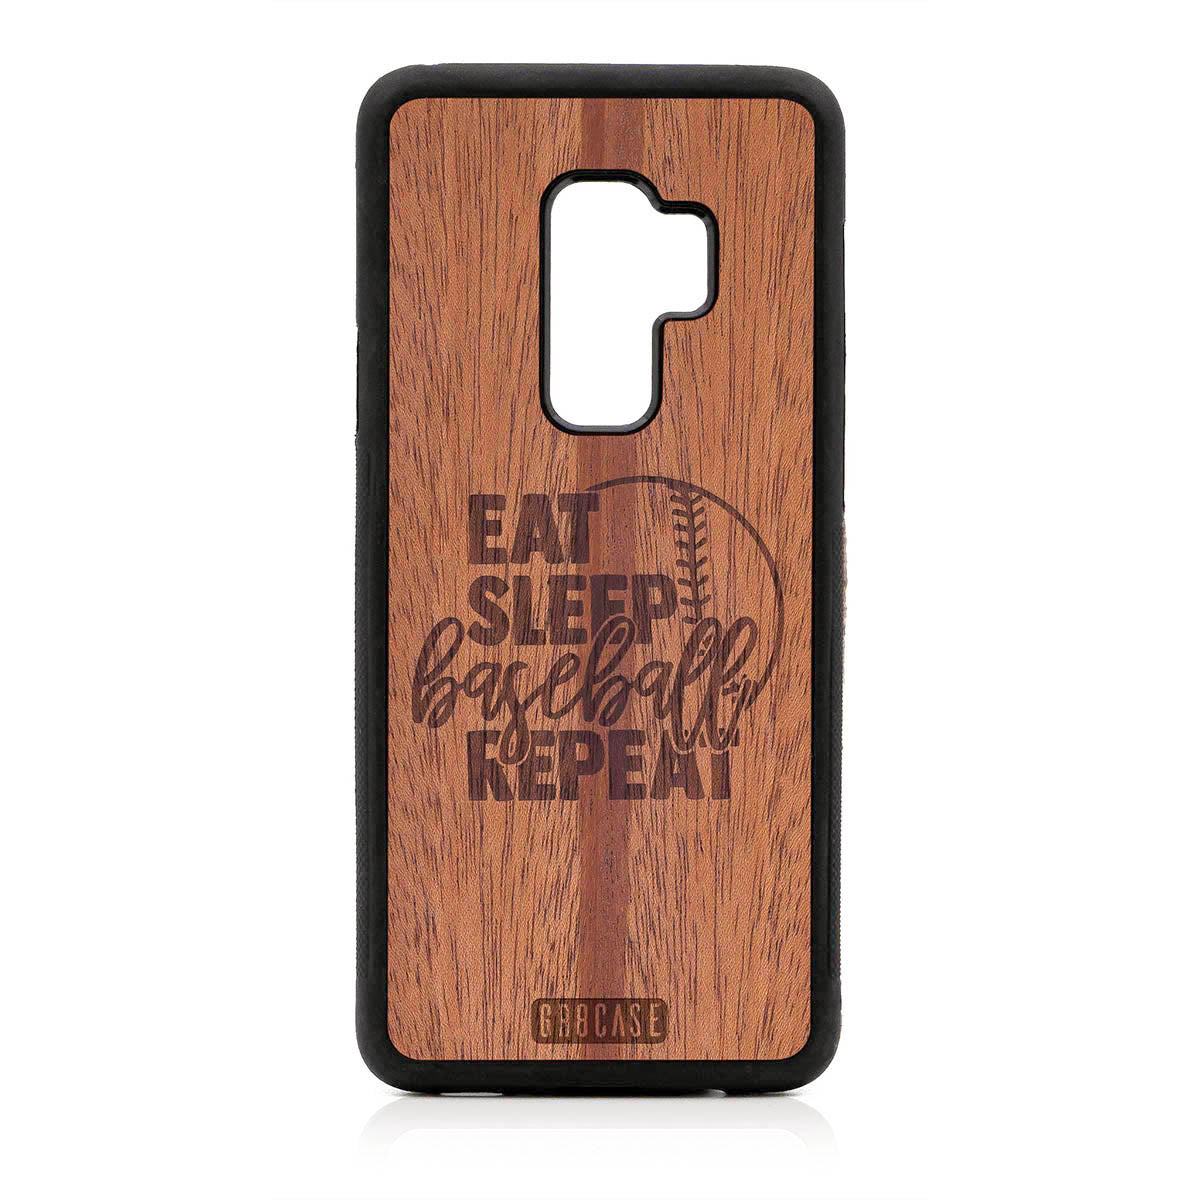 Eat Sleep Baseball Repeat Design Wood Case For Samsung Galaxy S9 Plus